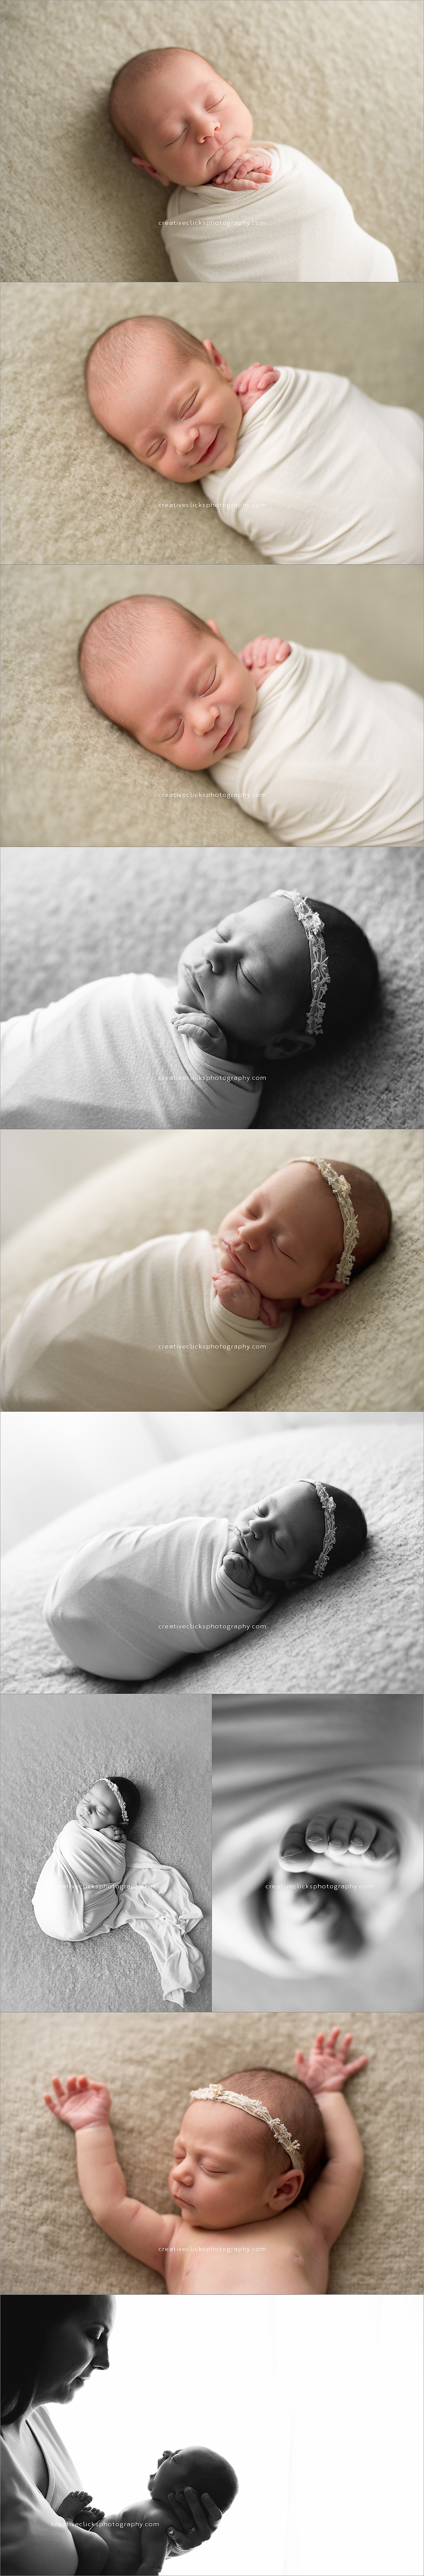 josette-niagara-newborn-photographers